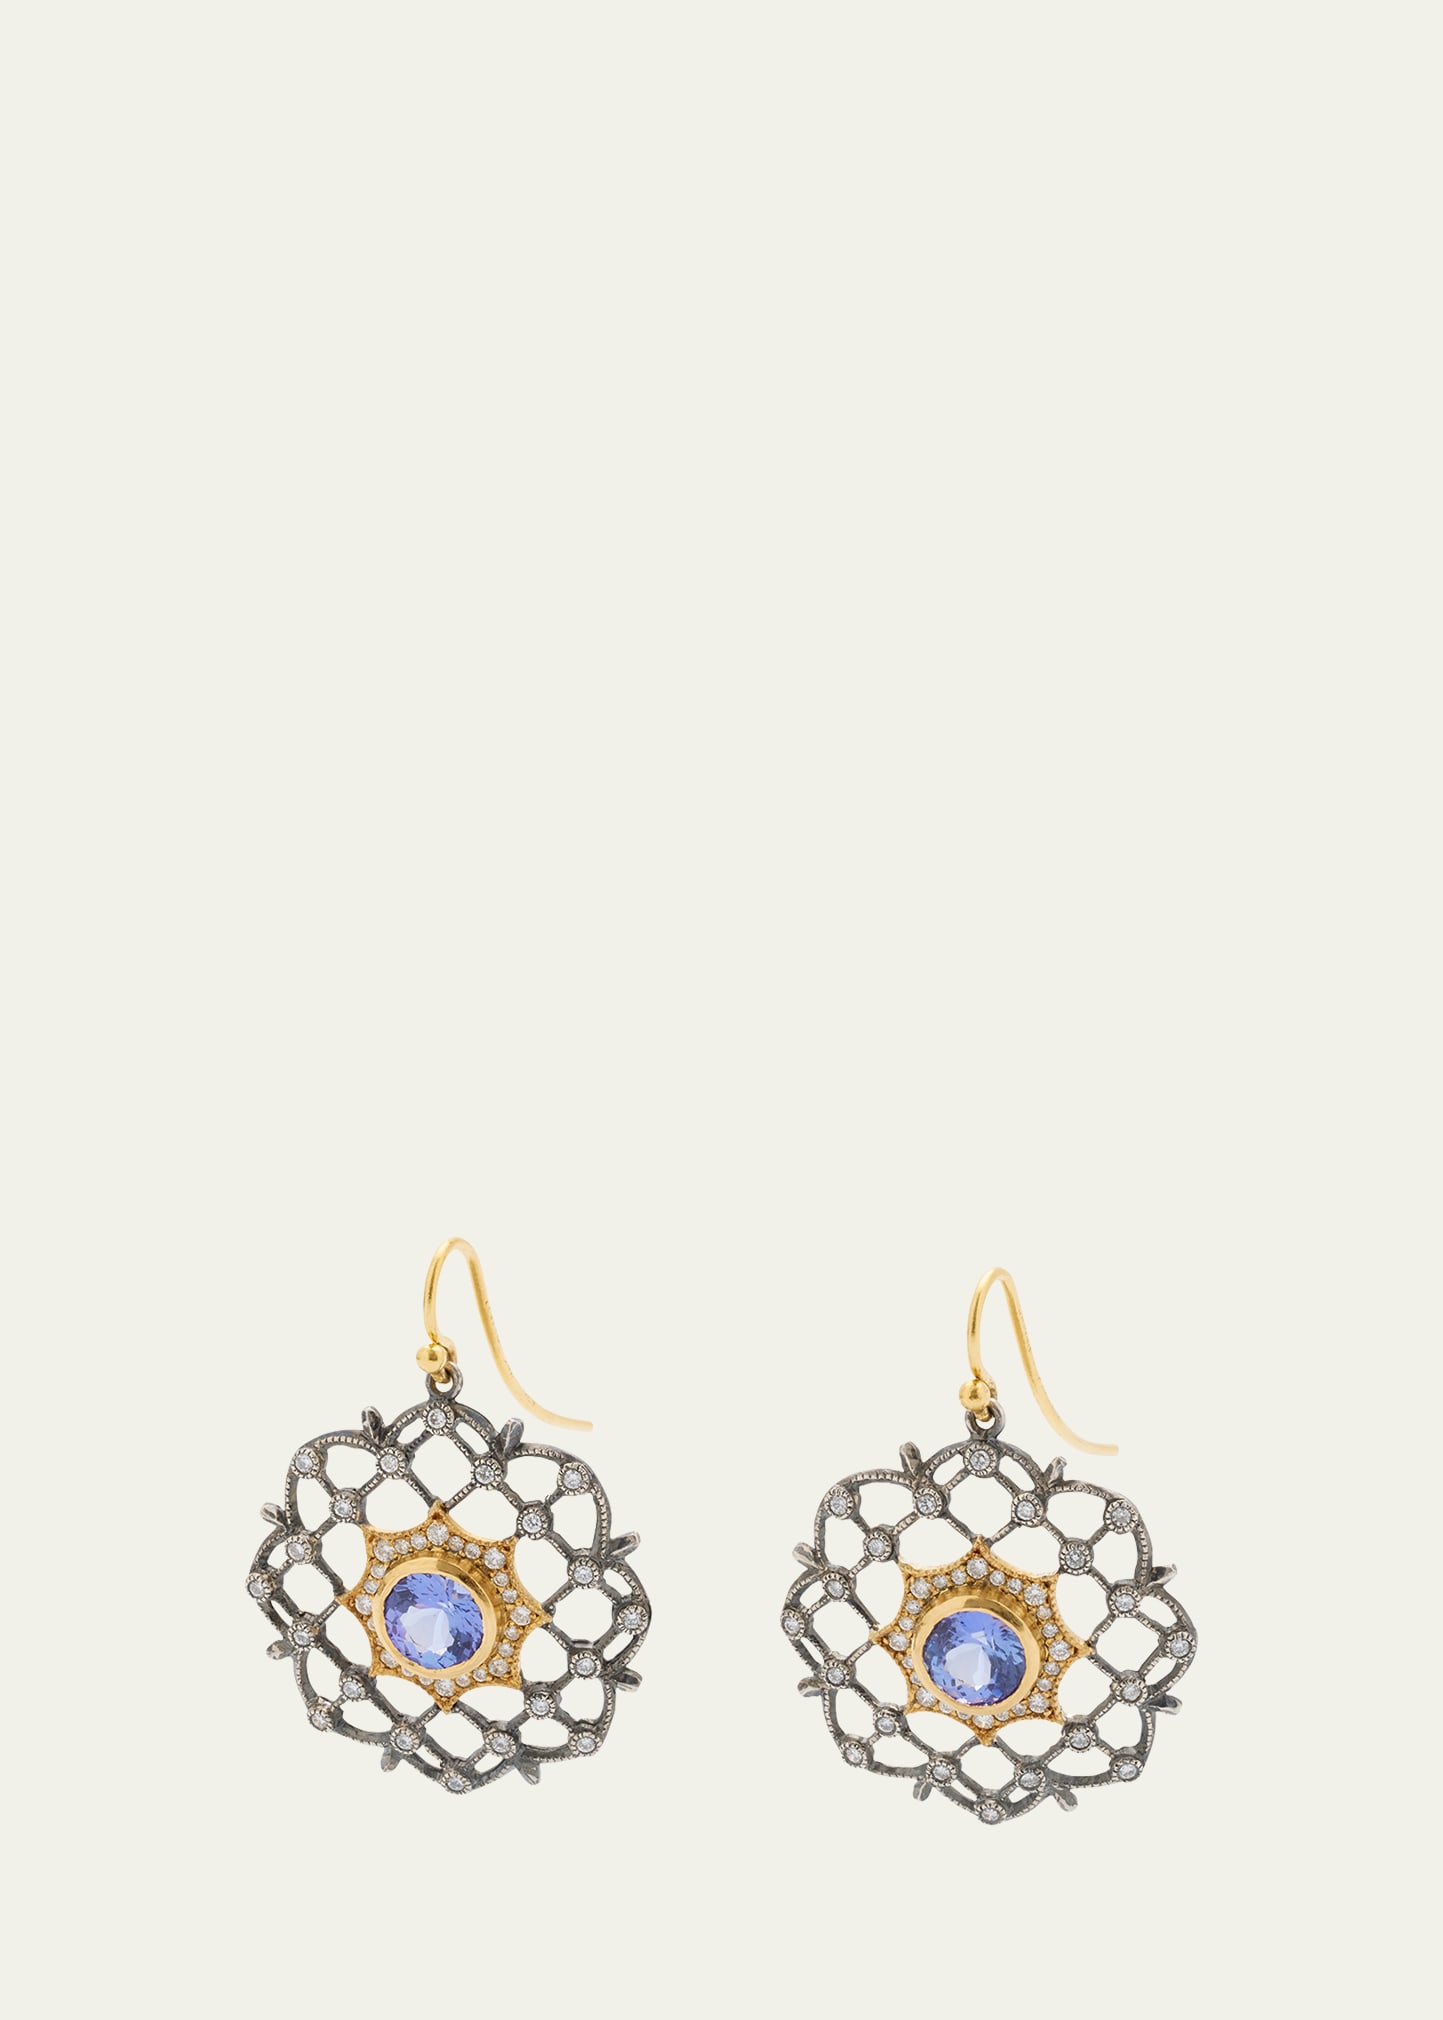 Arman Sarkisyan Lattice Earrings with Tanzanite and Diamonds